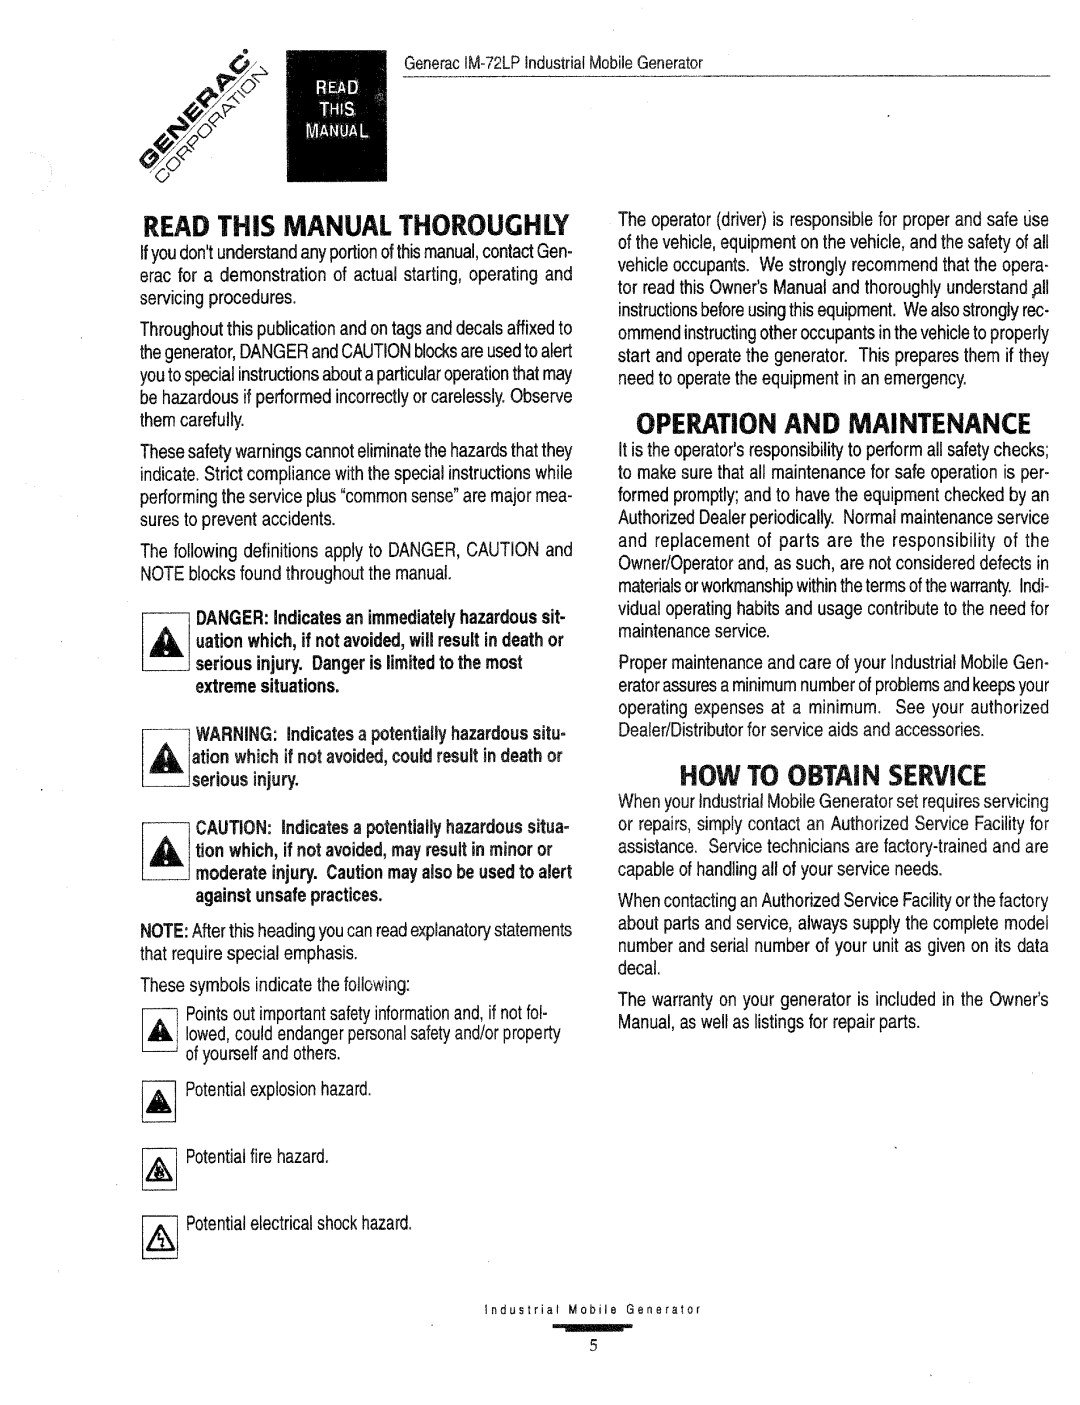 Generac Power Systems 09843-2 manual 